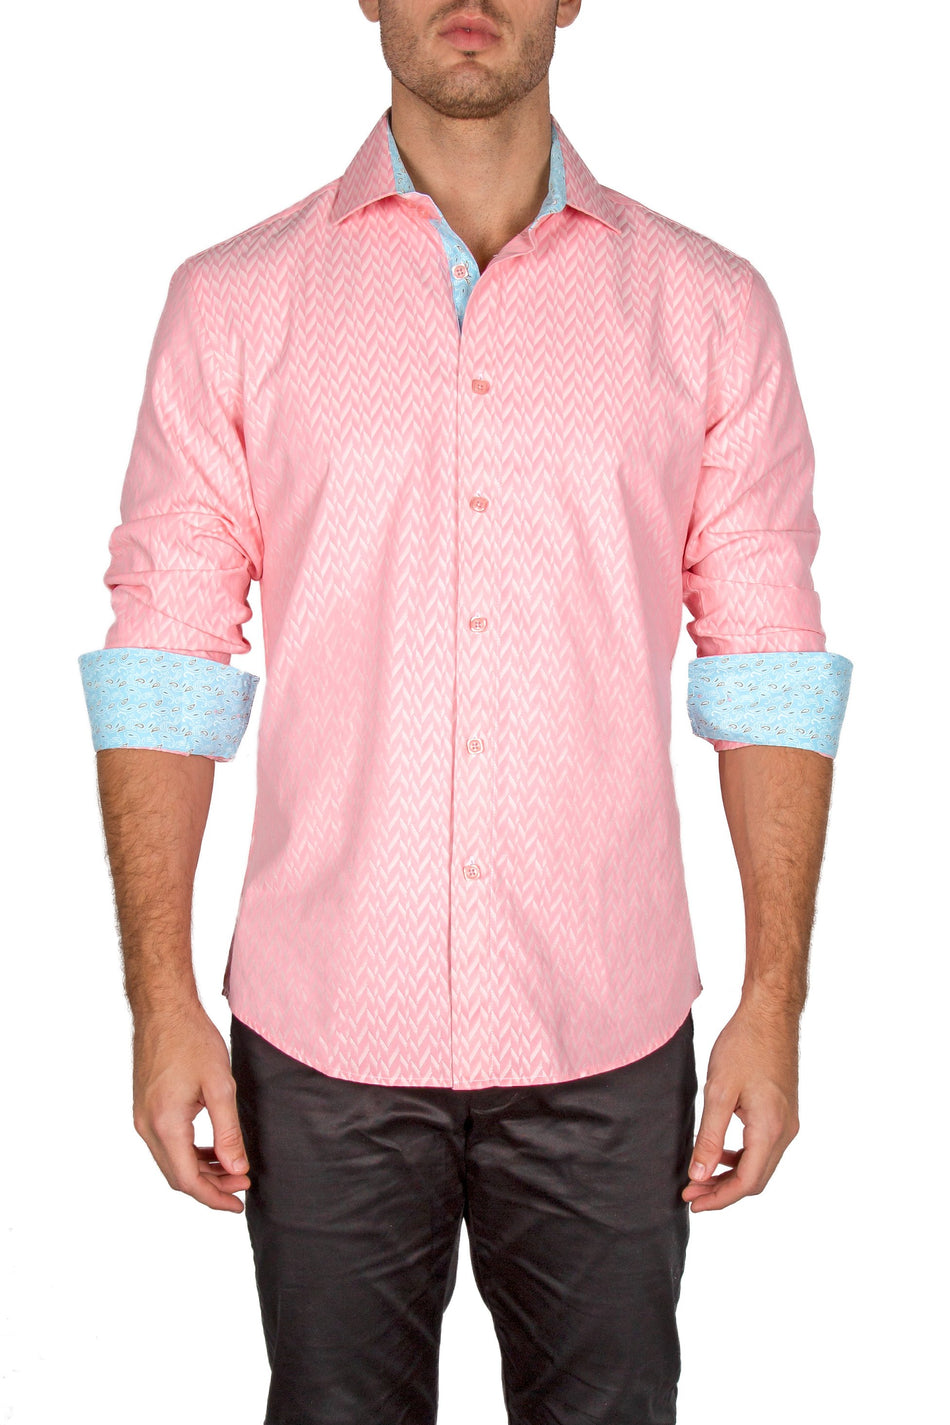 Men's Pink Long Sleeve Button Up